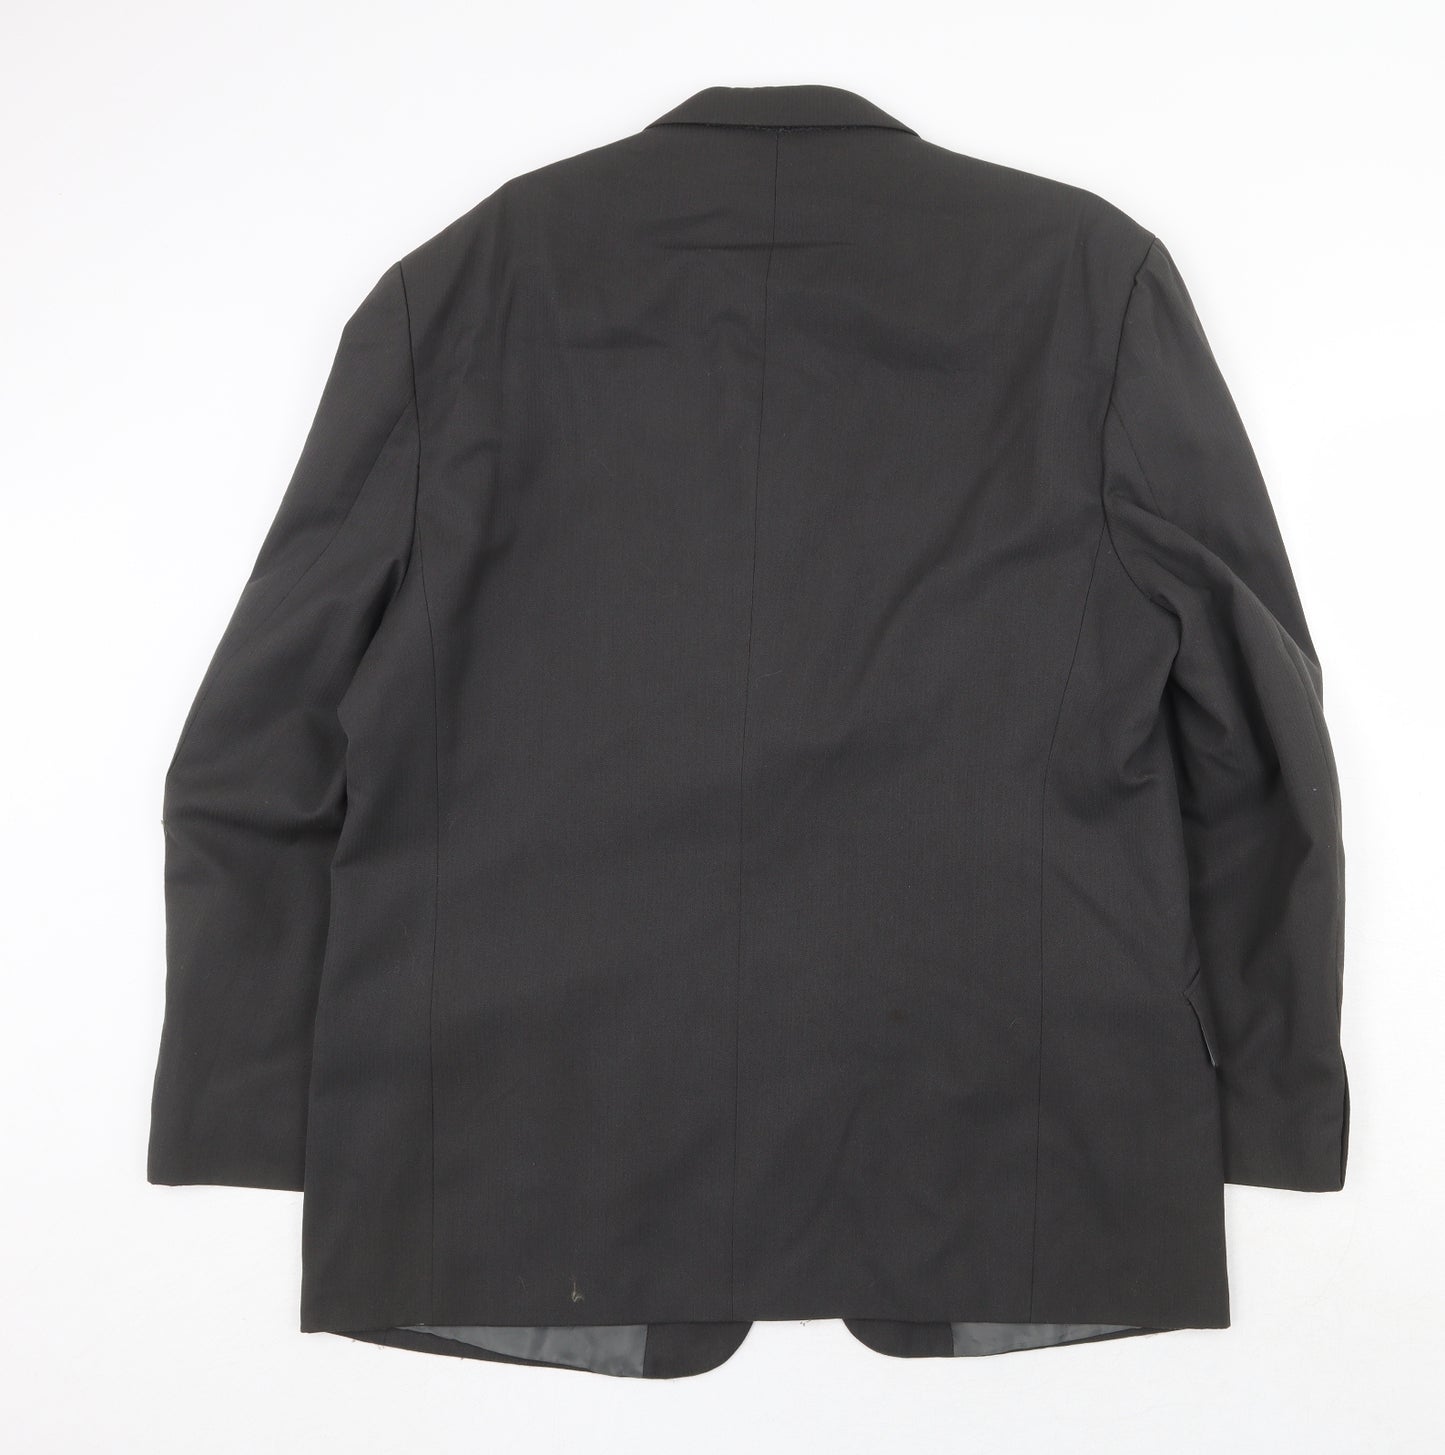 Wilson Mens Grey Polyester Jacket Suit Jacket Size 44 Regular